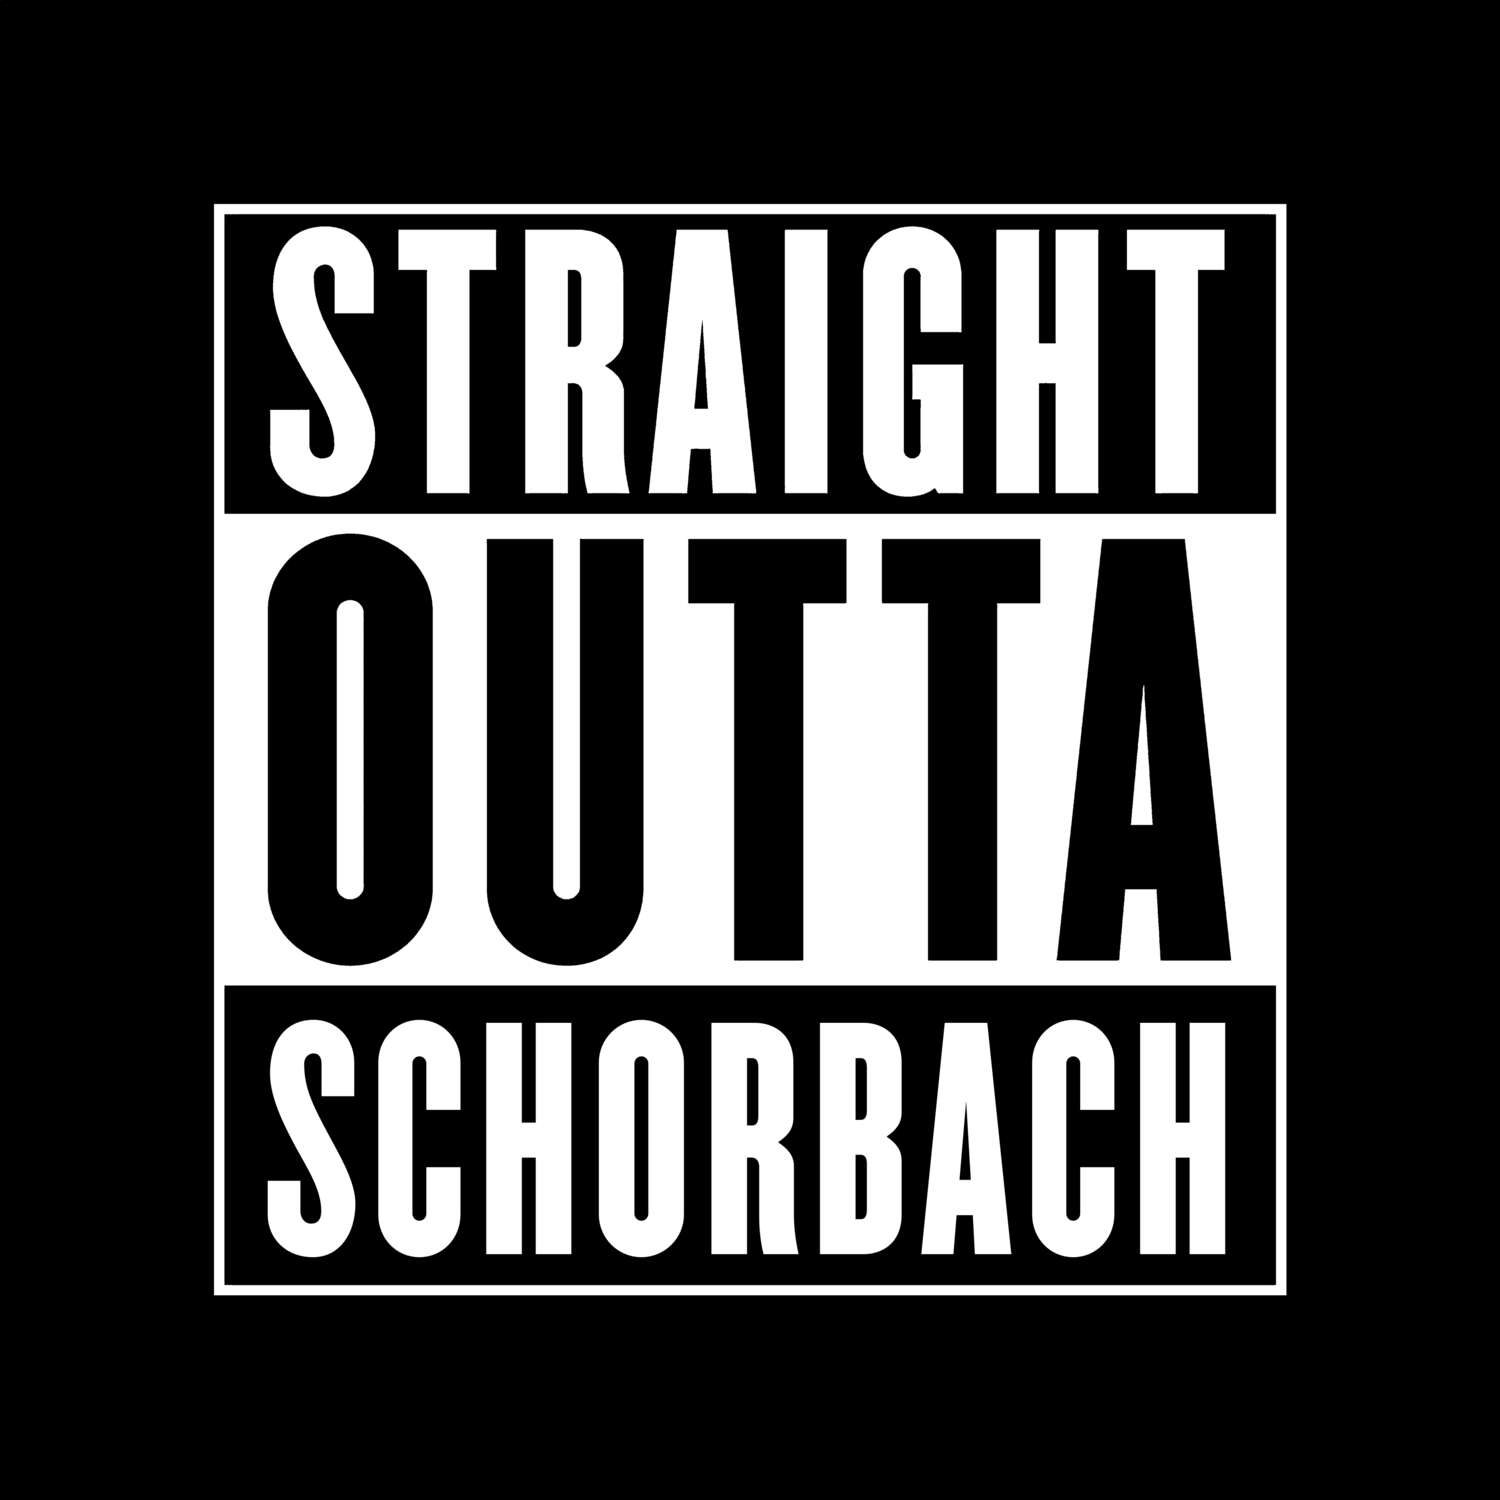 Schorbach T-Shirt »Straight Outta«